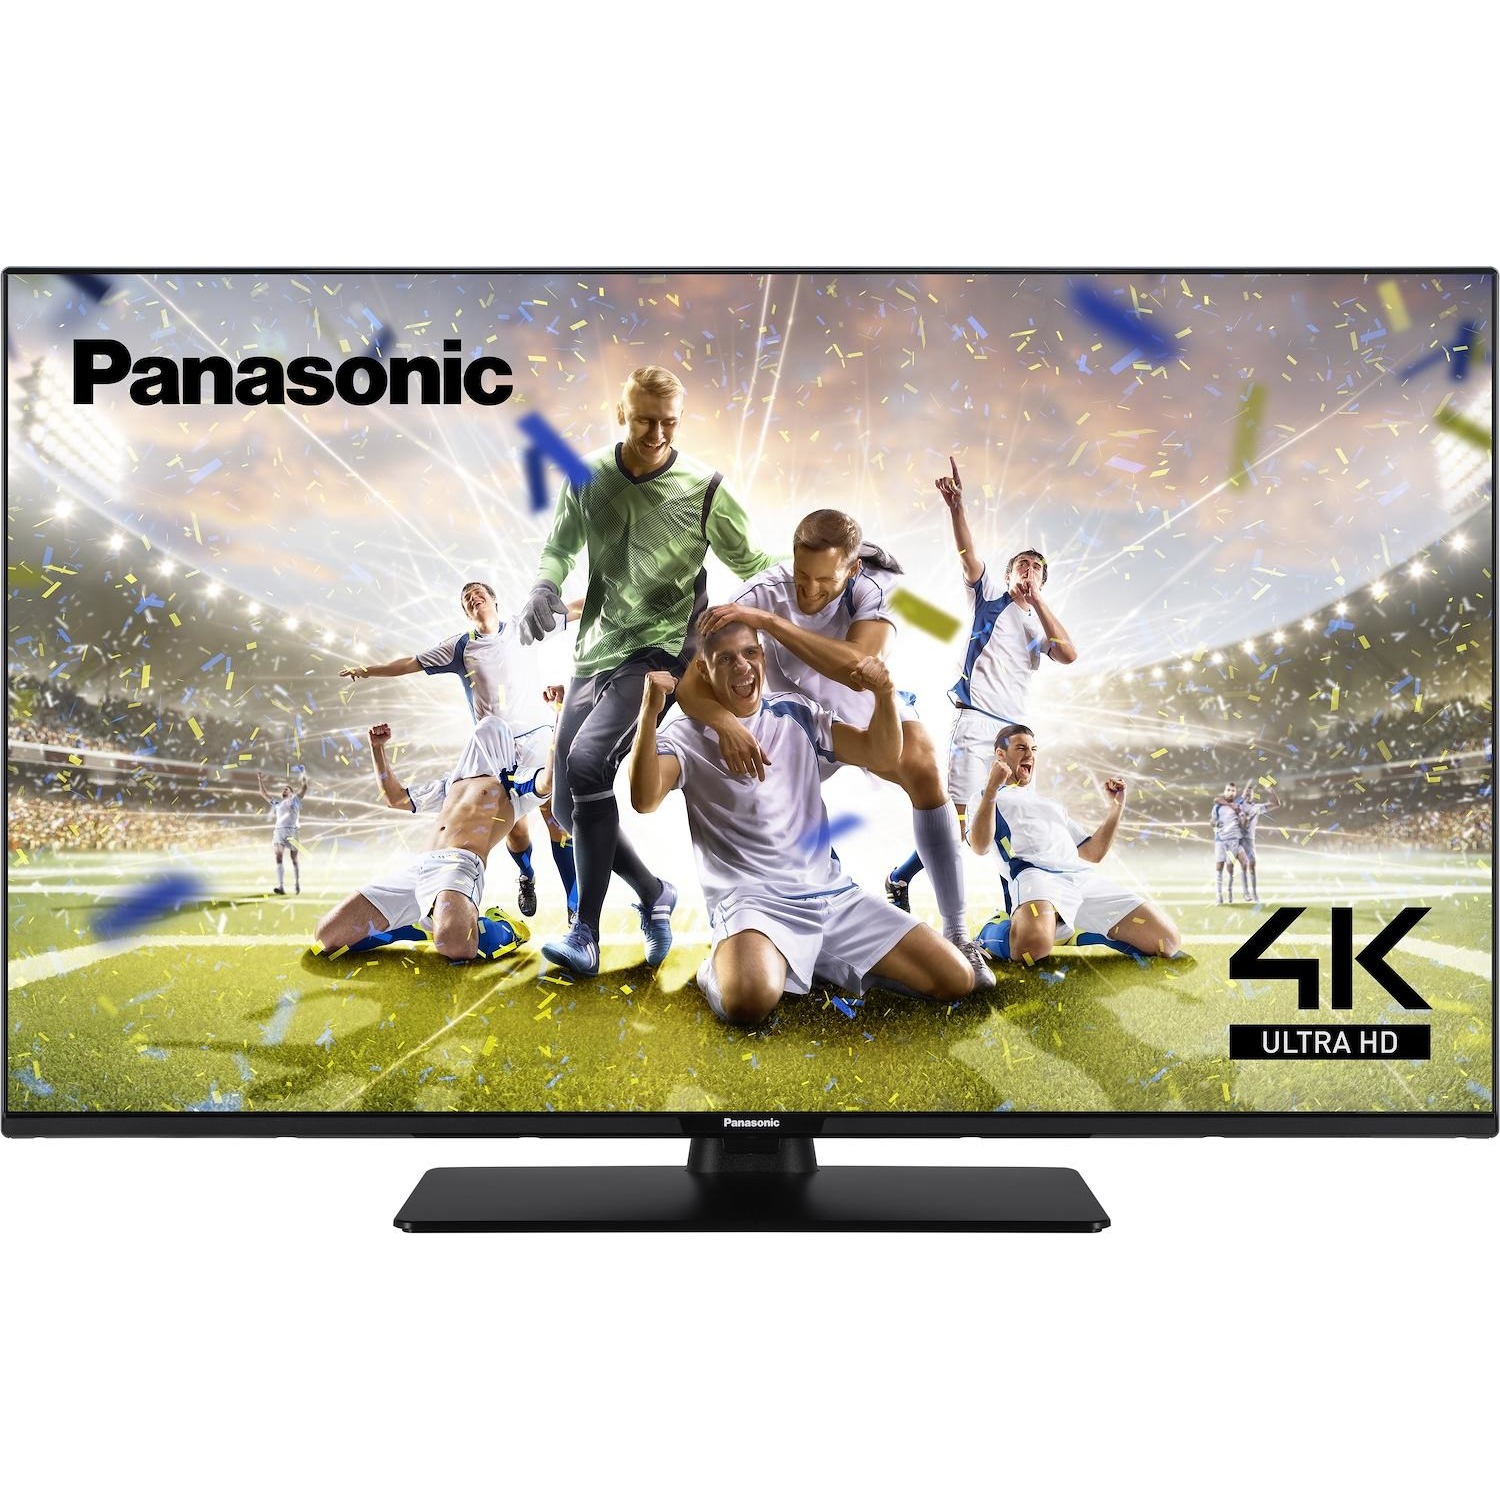 Immagine per TV LED Smart 4K UHD Panasonic 43MX600E da DIMOStore